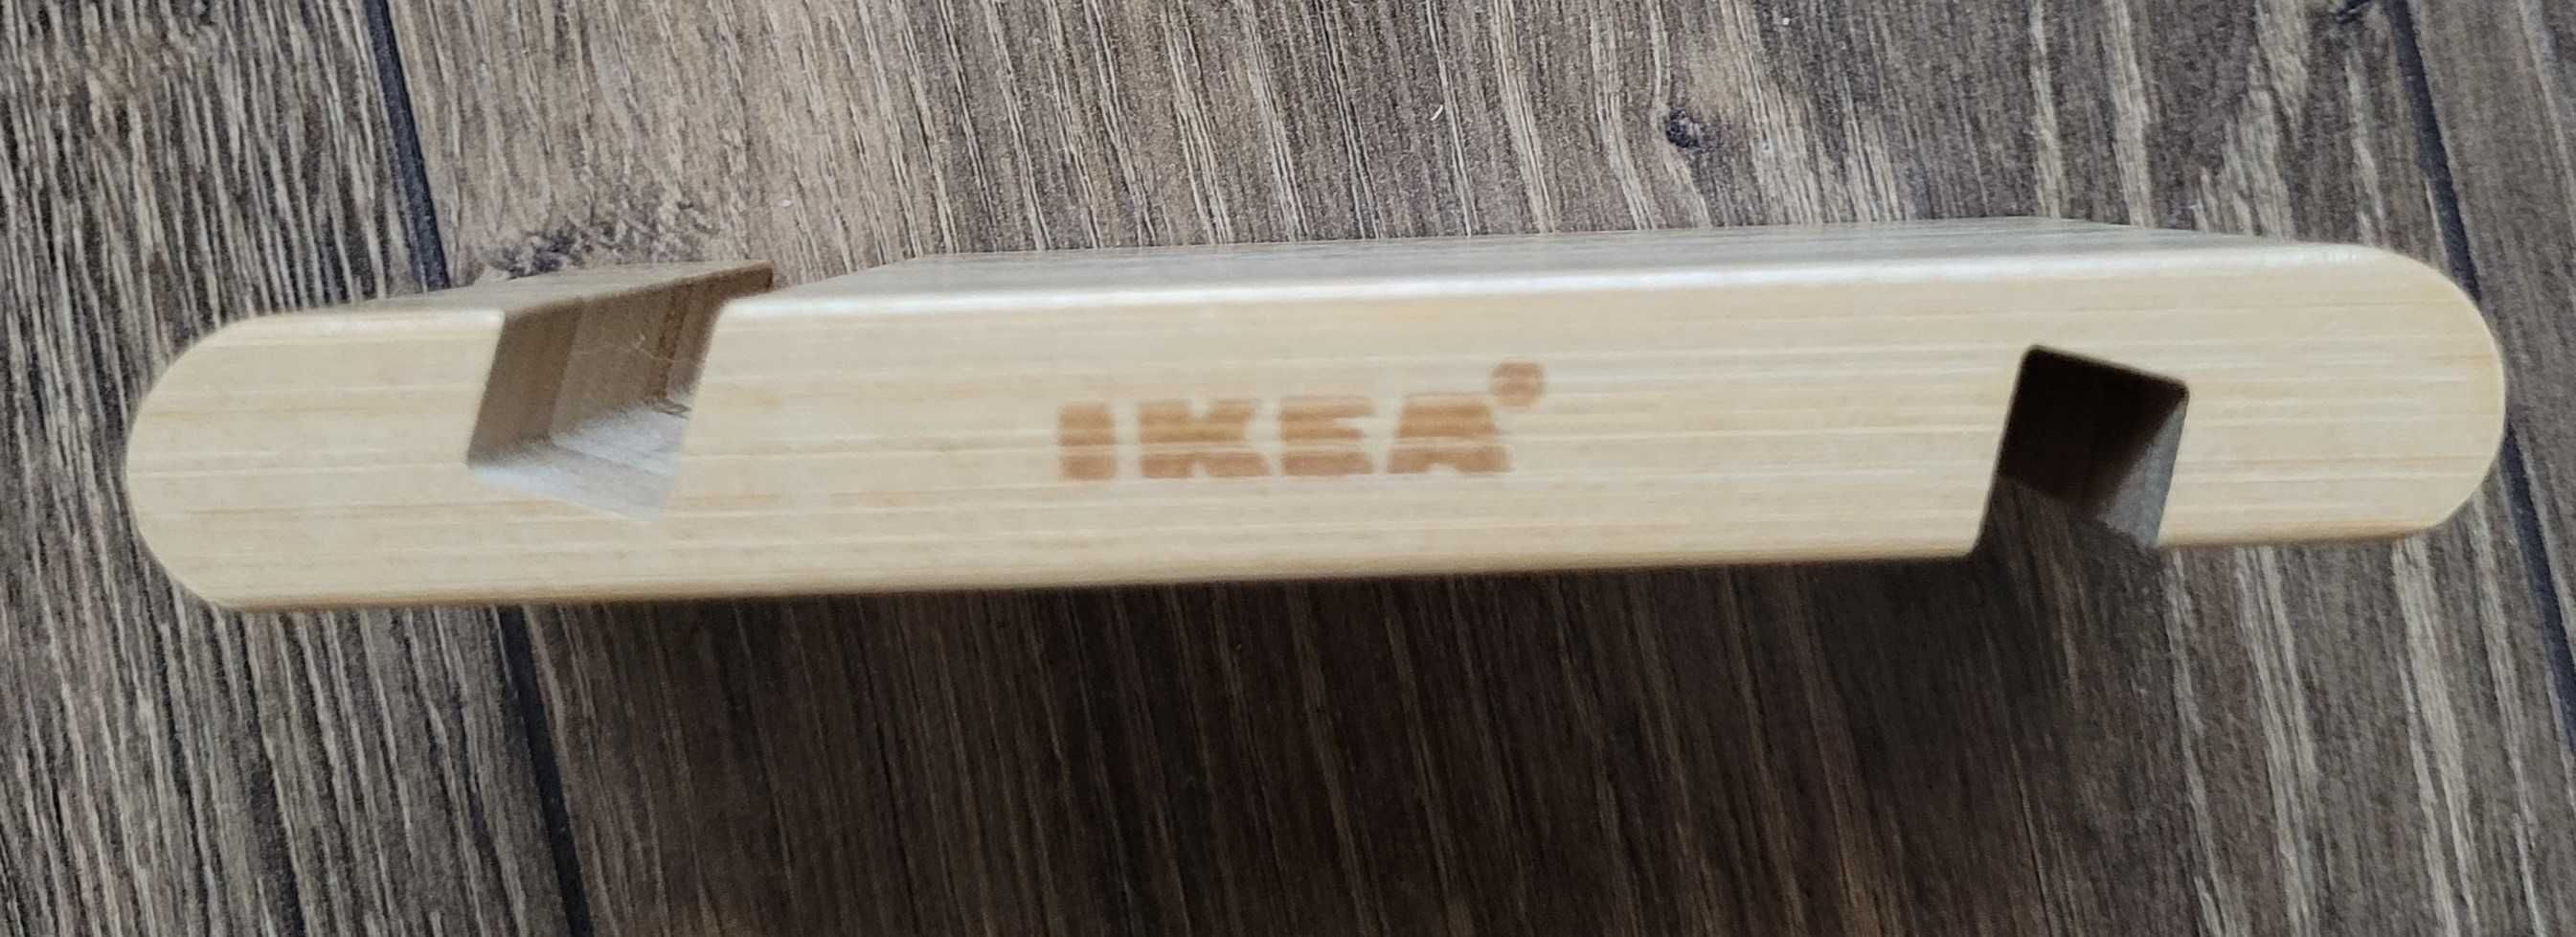 podstawka stojak pod telefon smartfon tablet IKEA drewno bambusowa